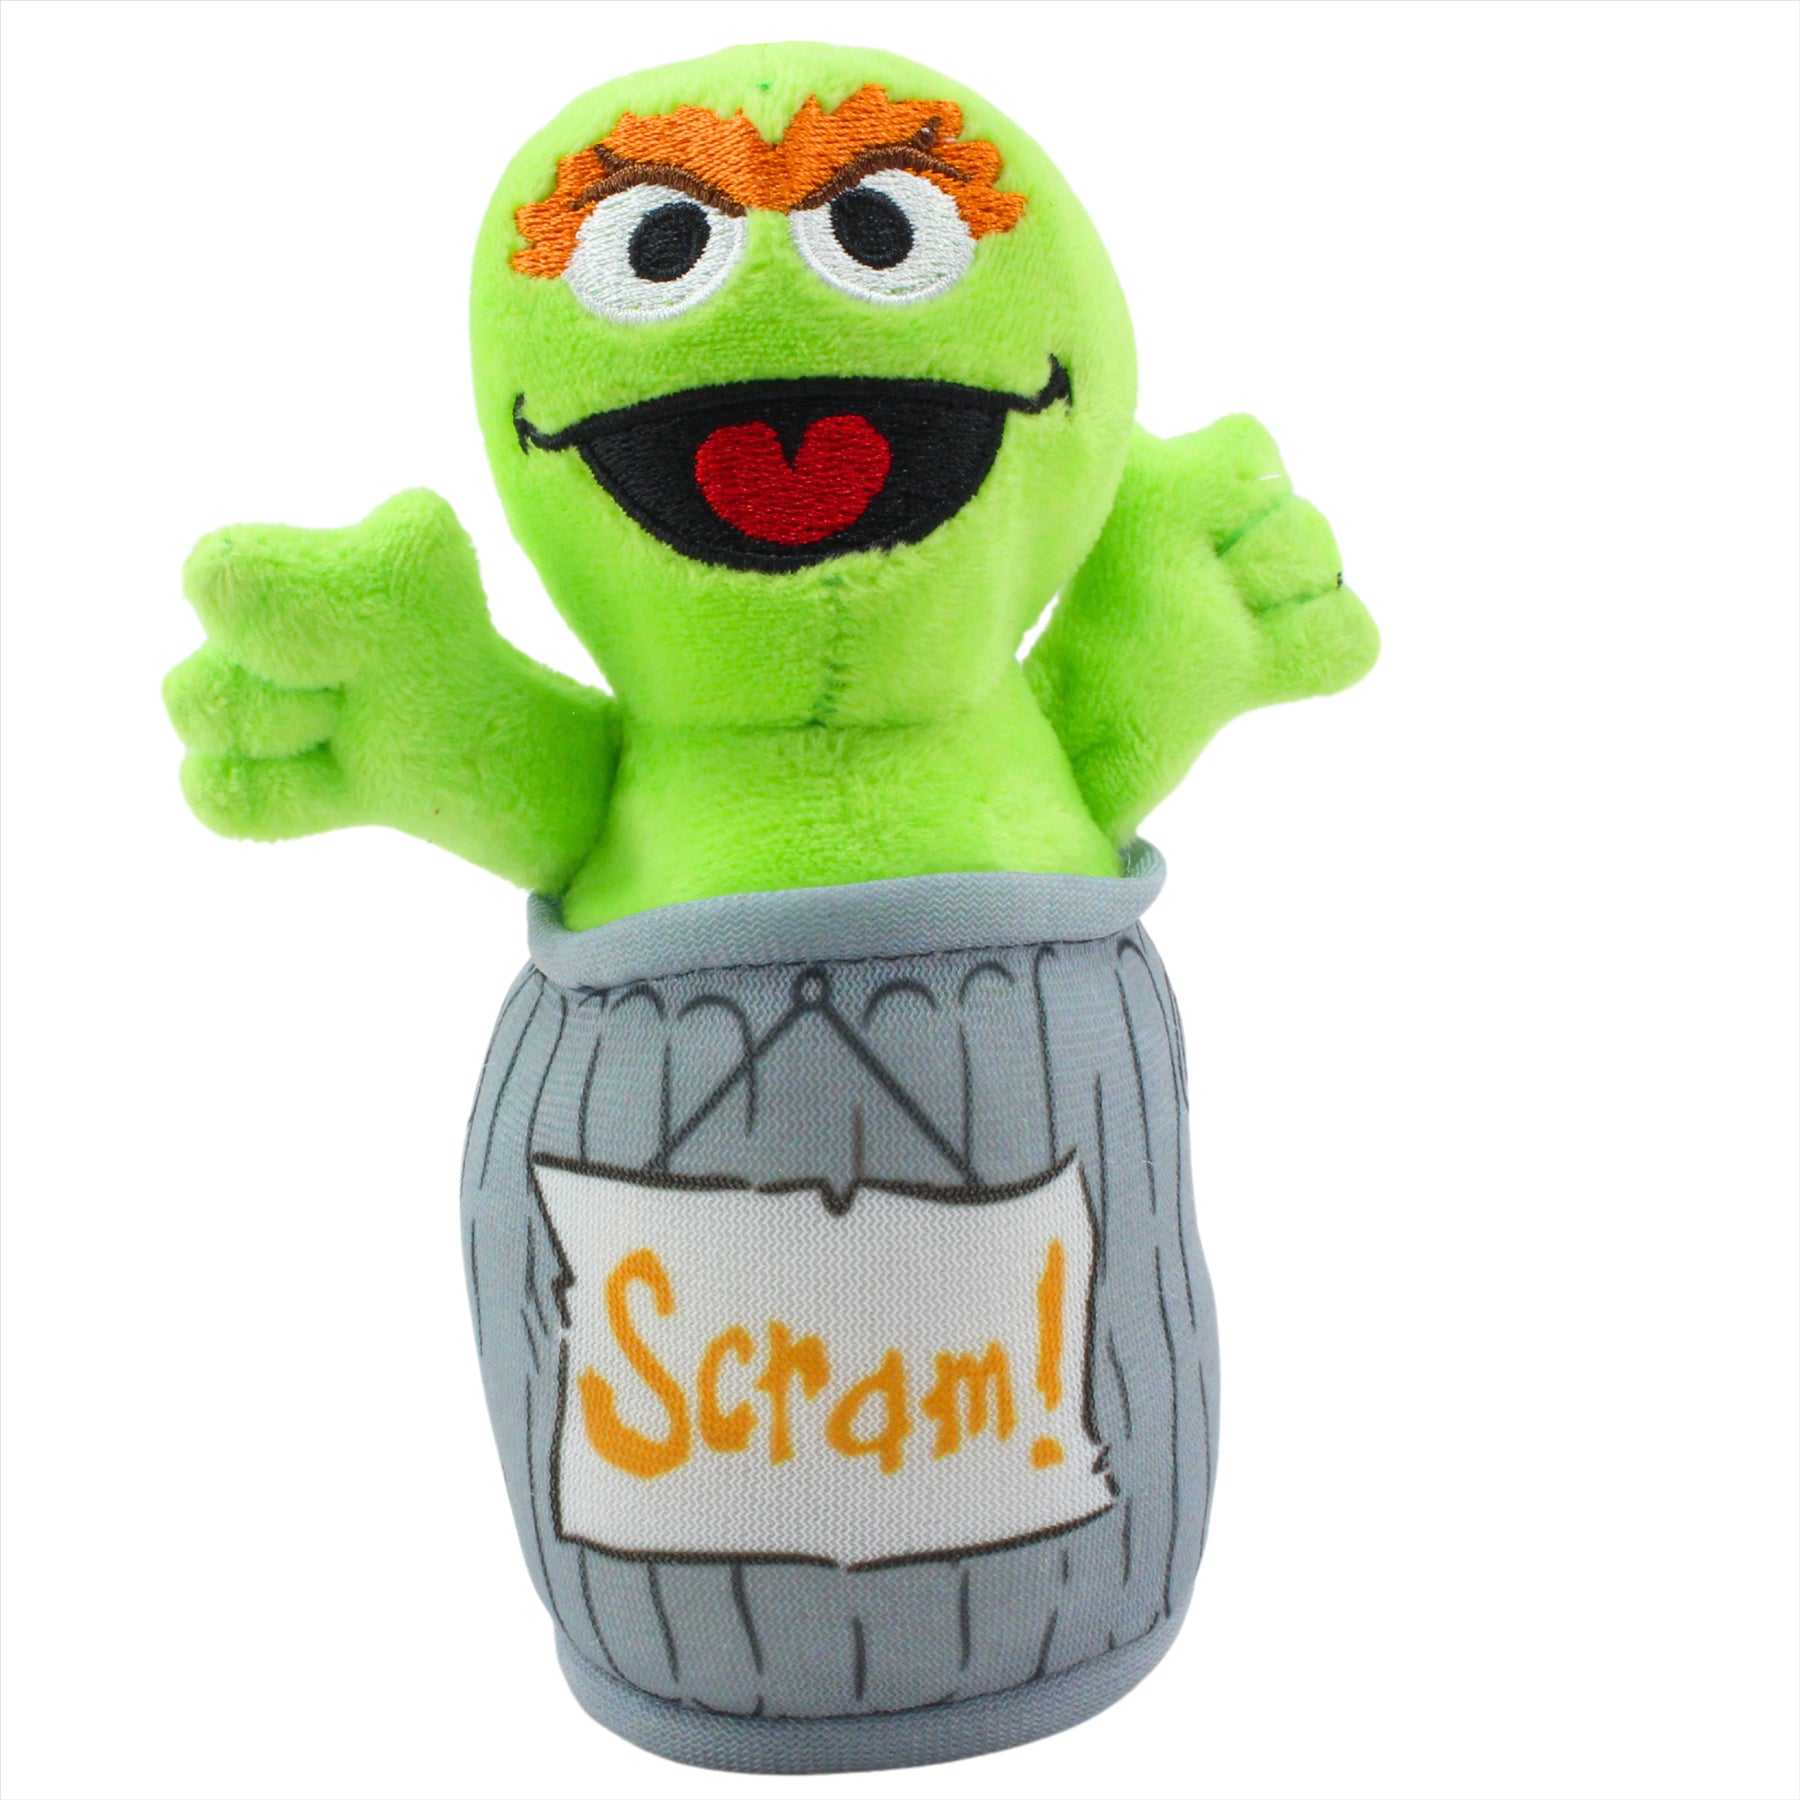 Sesame Street - Oscar 6" Super Soft Plush Toy - Toptoys2u